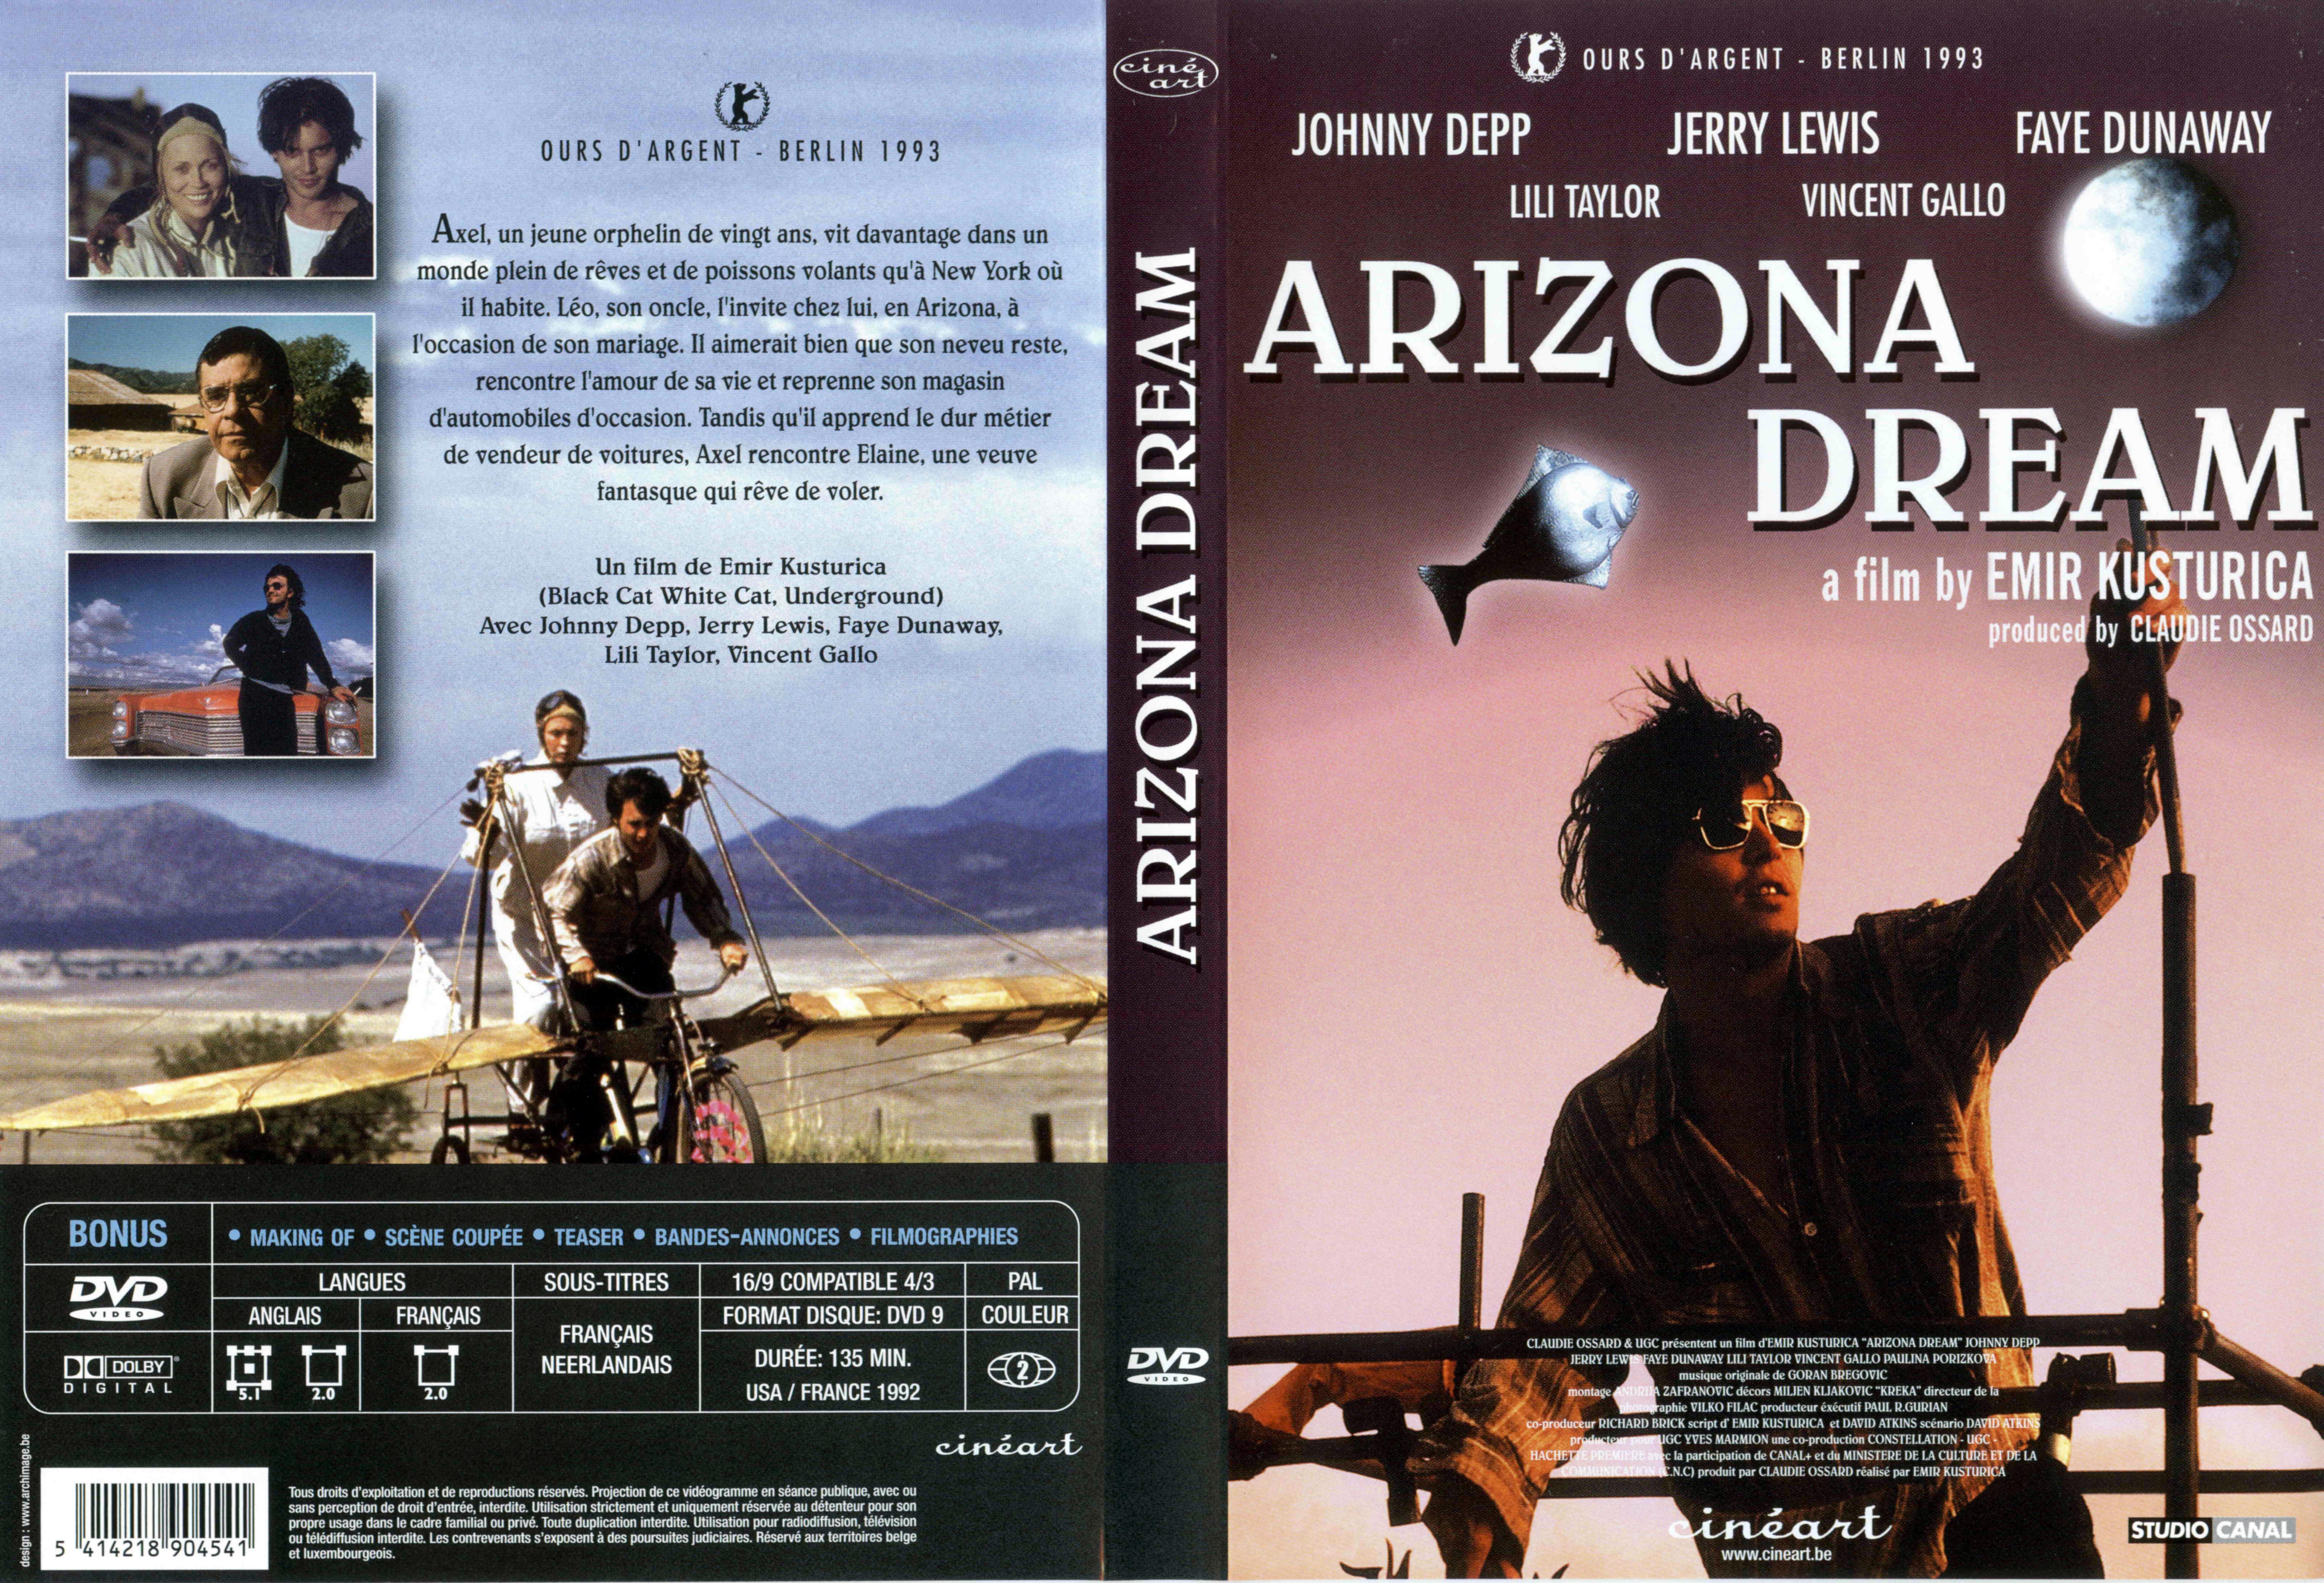 Jaquette DVD Arizona dream v2